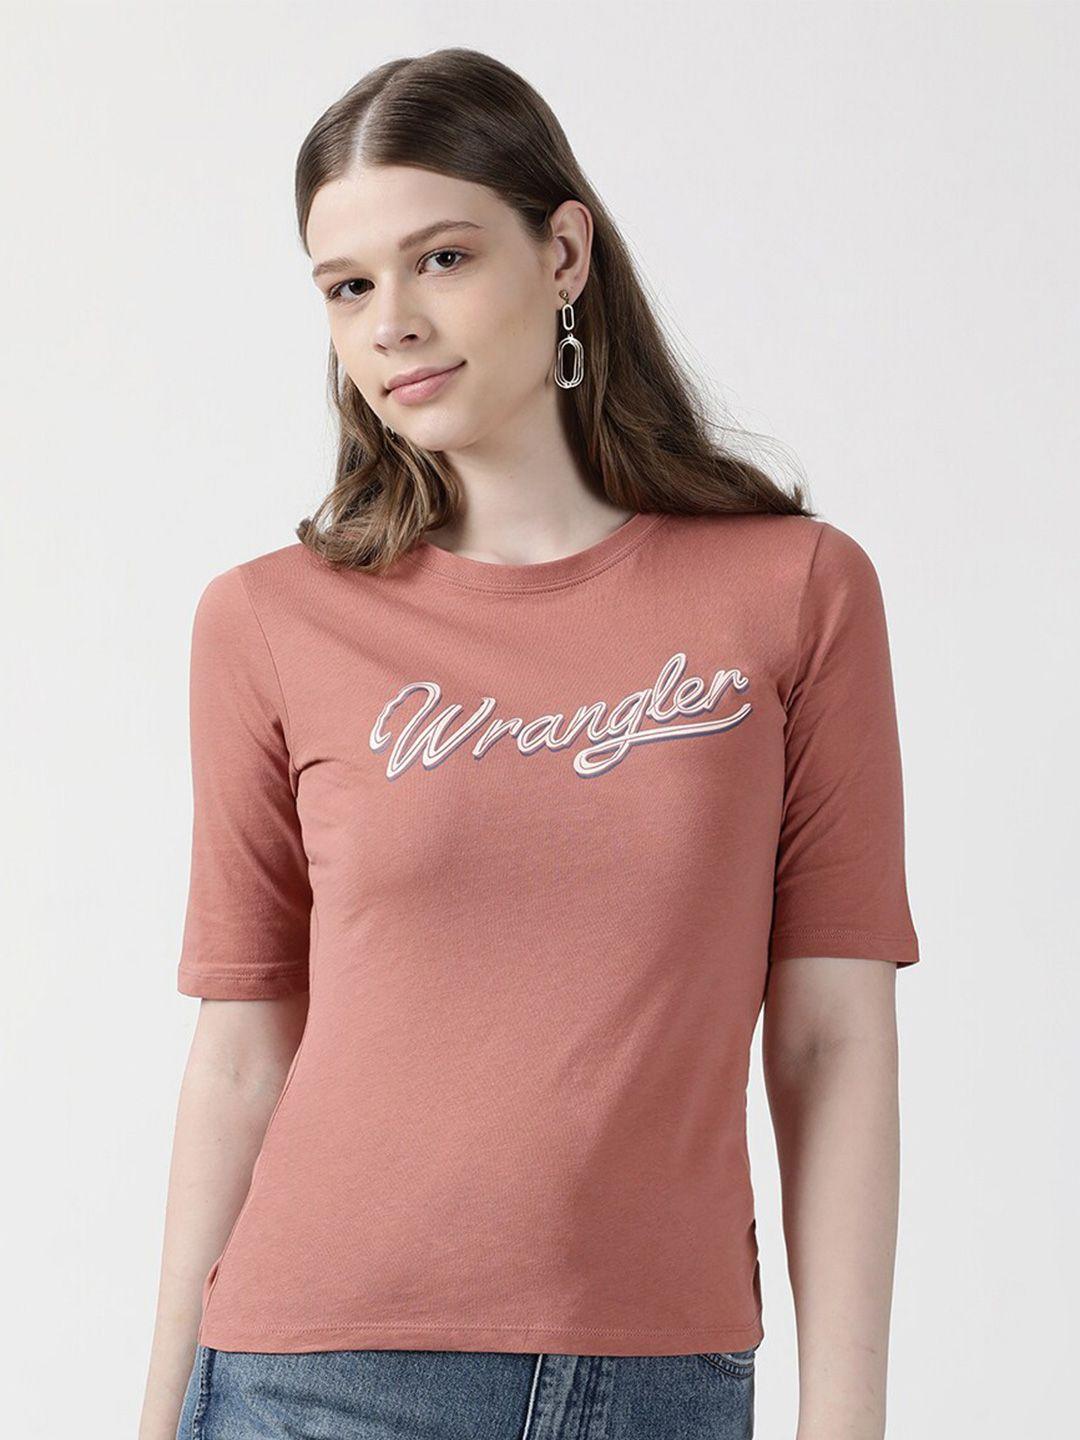 wrangler women typography printed cotton t-shirt